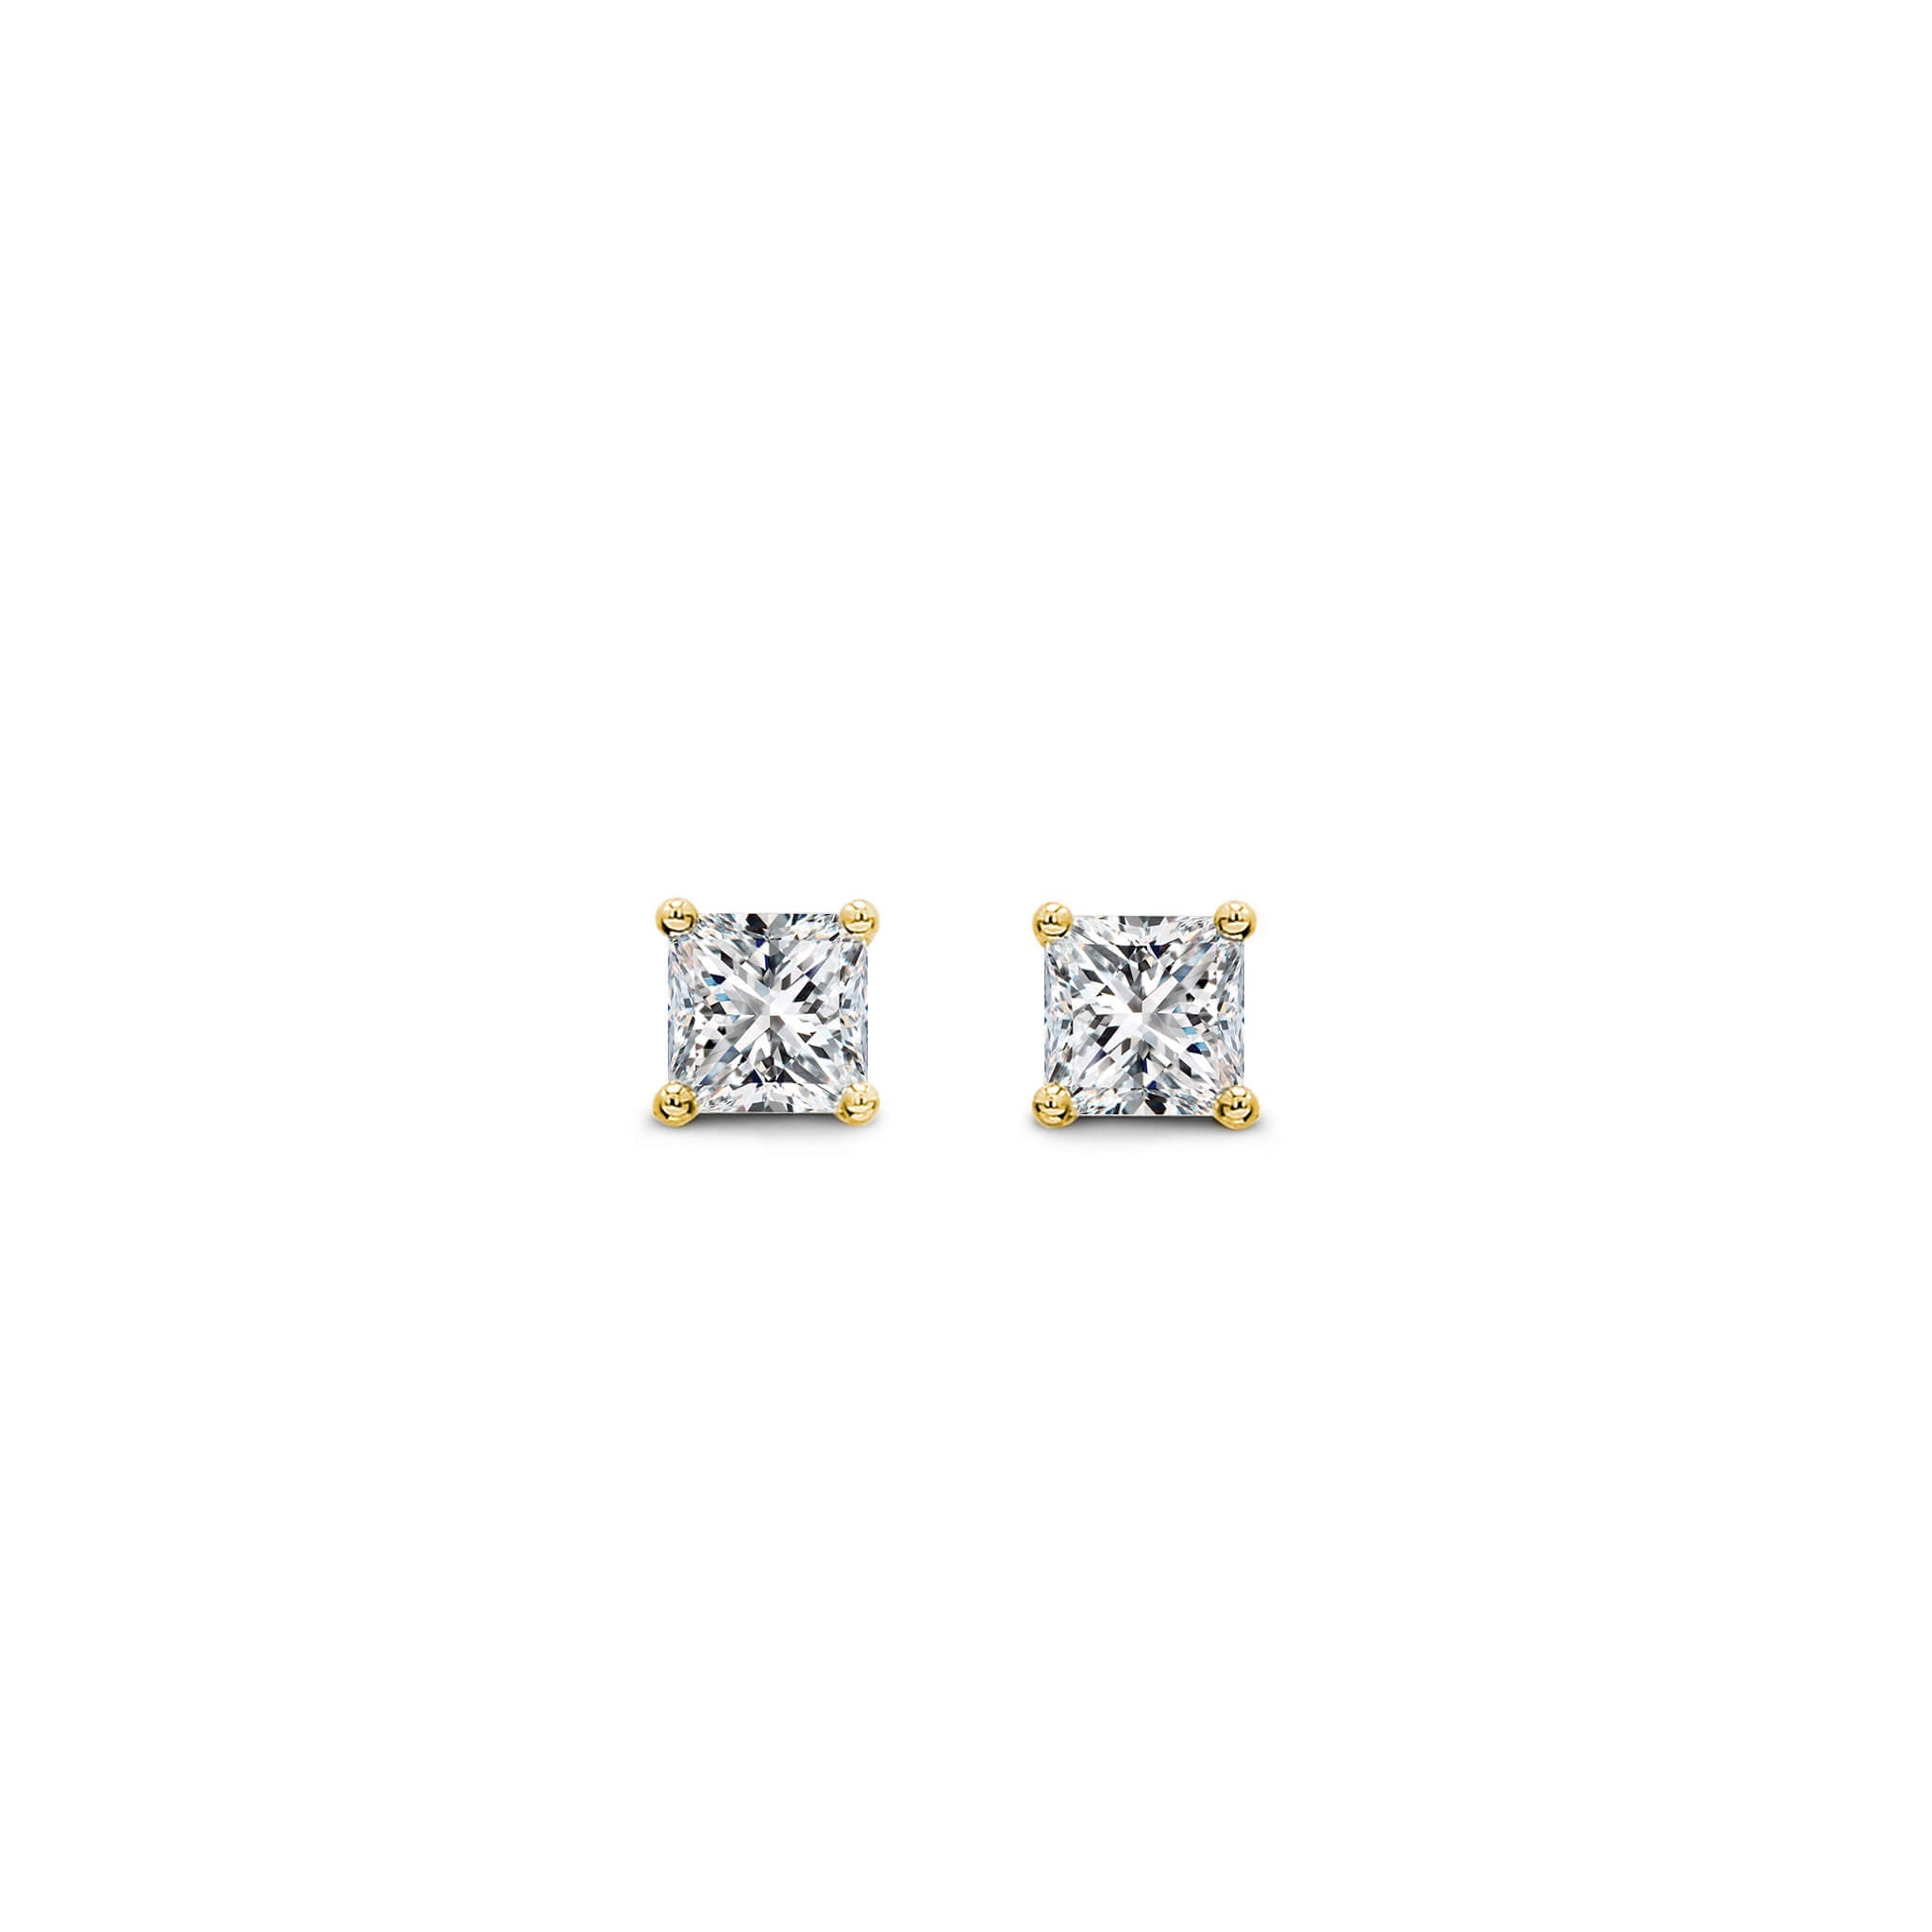 My Girl Diamond Earrings - Front View - SHIMANSKY.CO.ZA